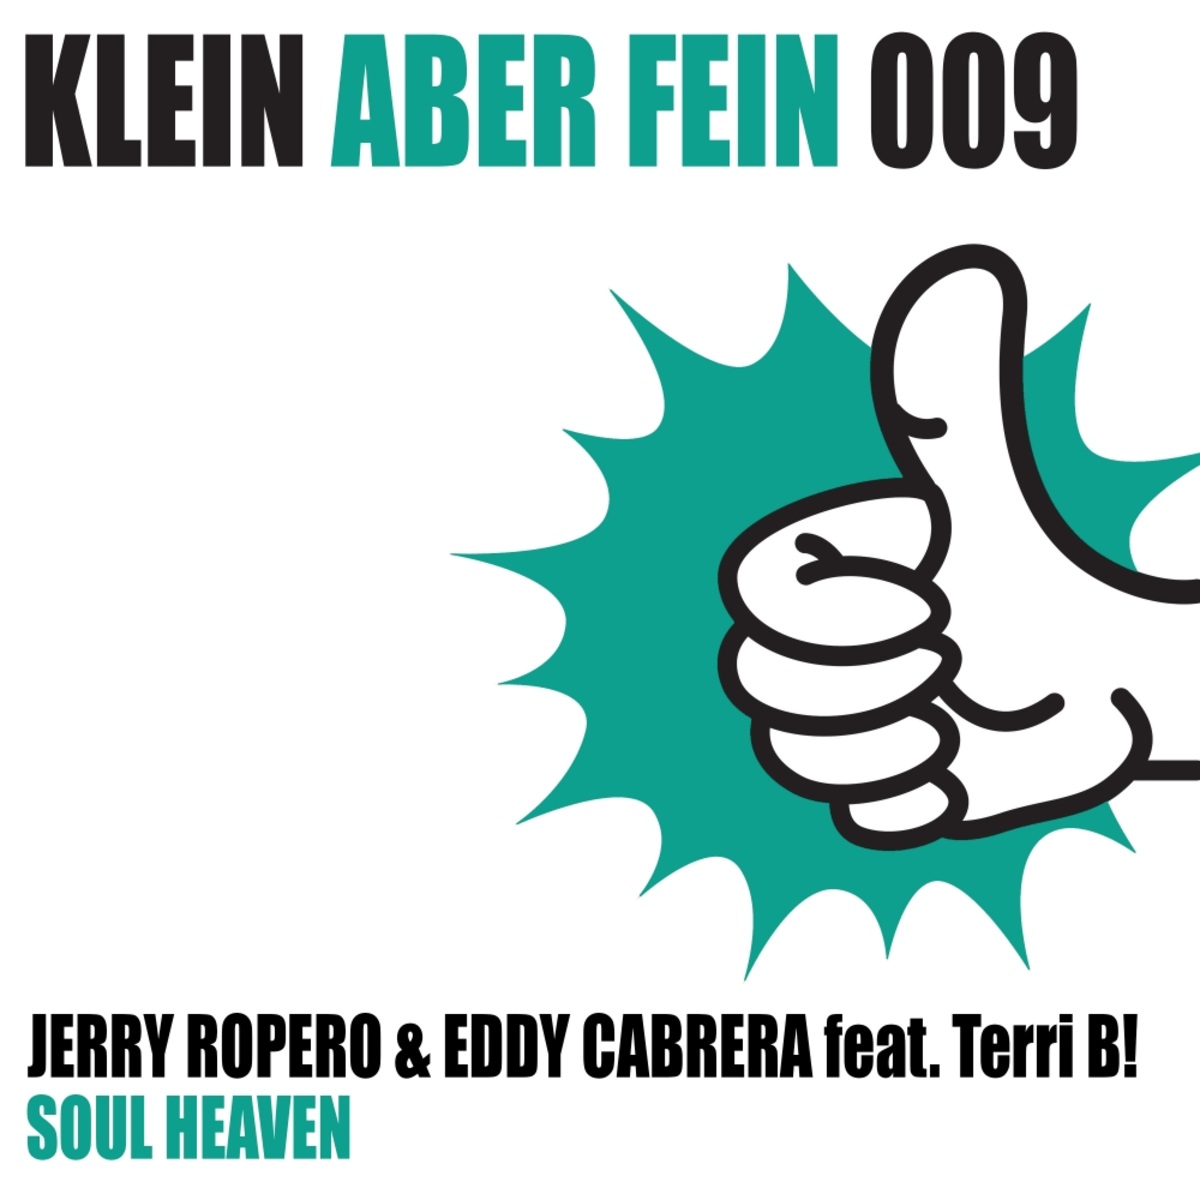 Jerry Ropero & Eddy Cabrera ft Terri B! - Soul Heaven / Klein Aber Fein Records